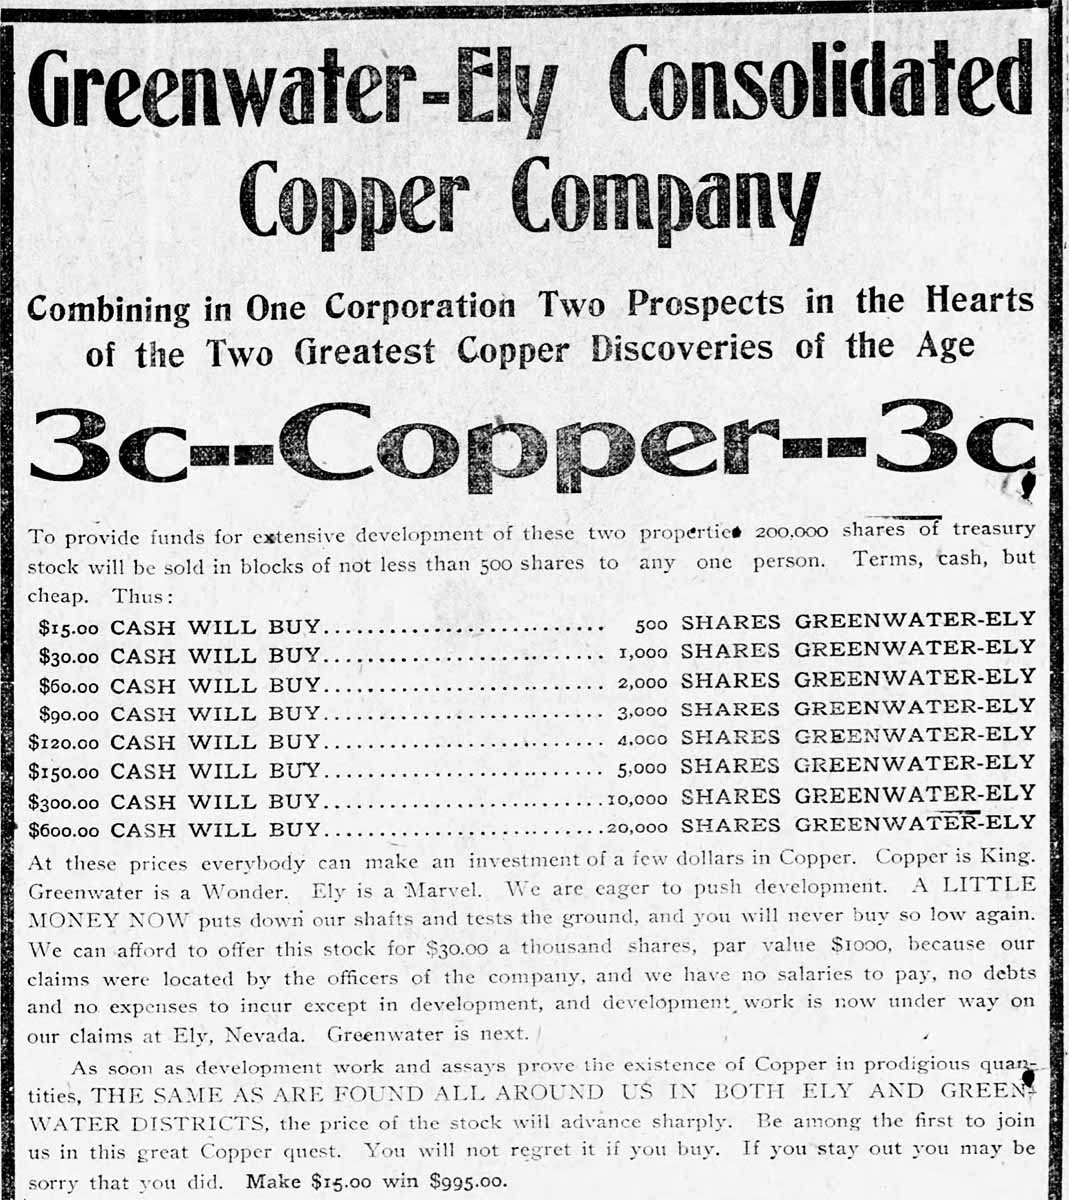 Greenwater California newspaper advertisement